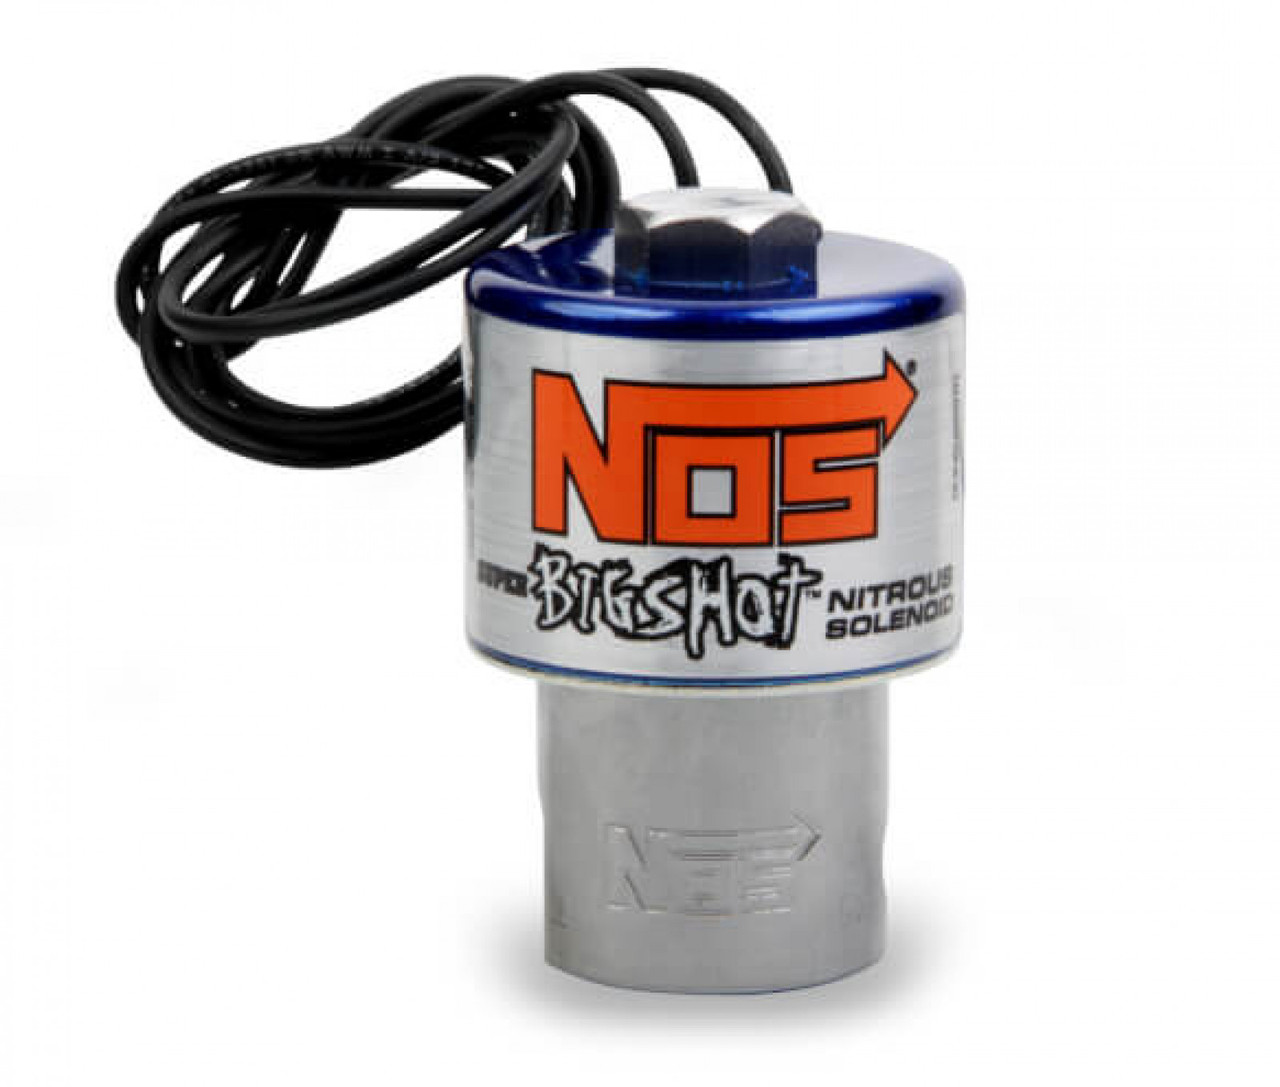 NOS Super Big Shot Nitrous Solenoid (NOS-118010NOS)